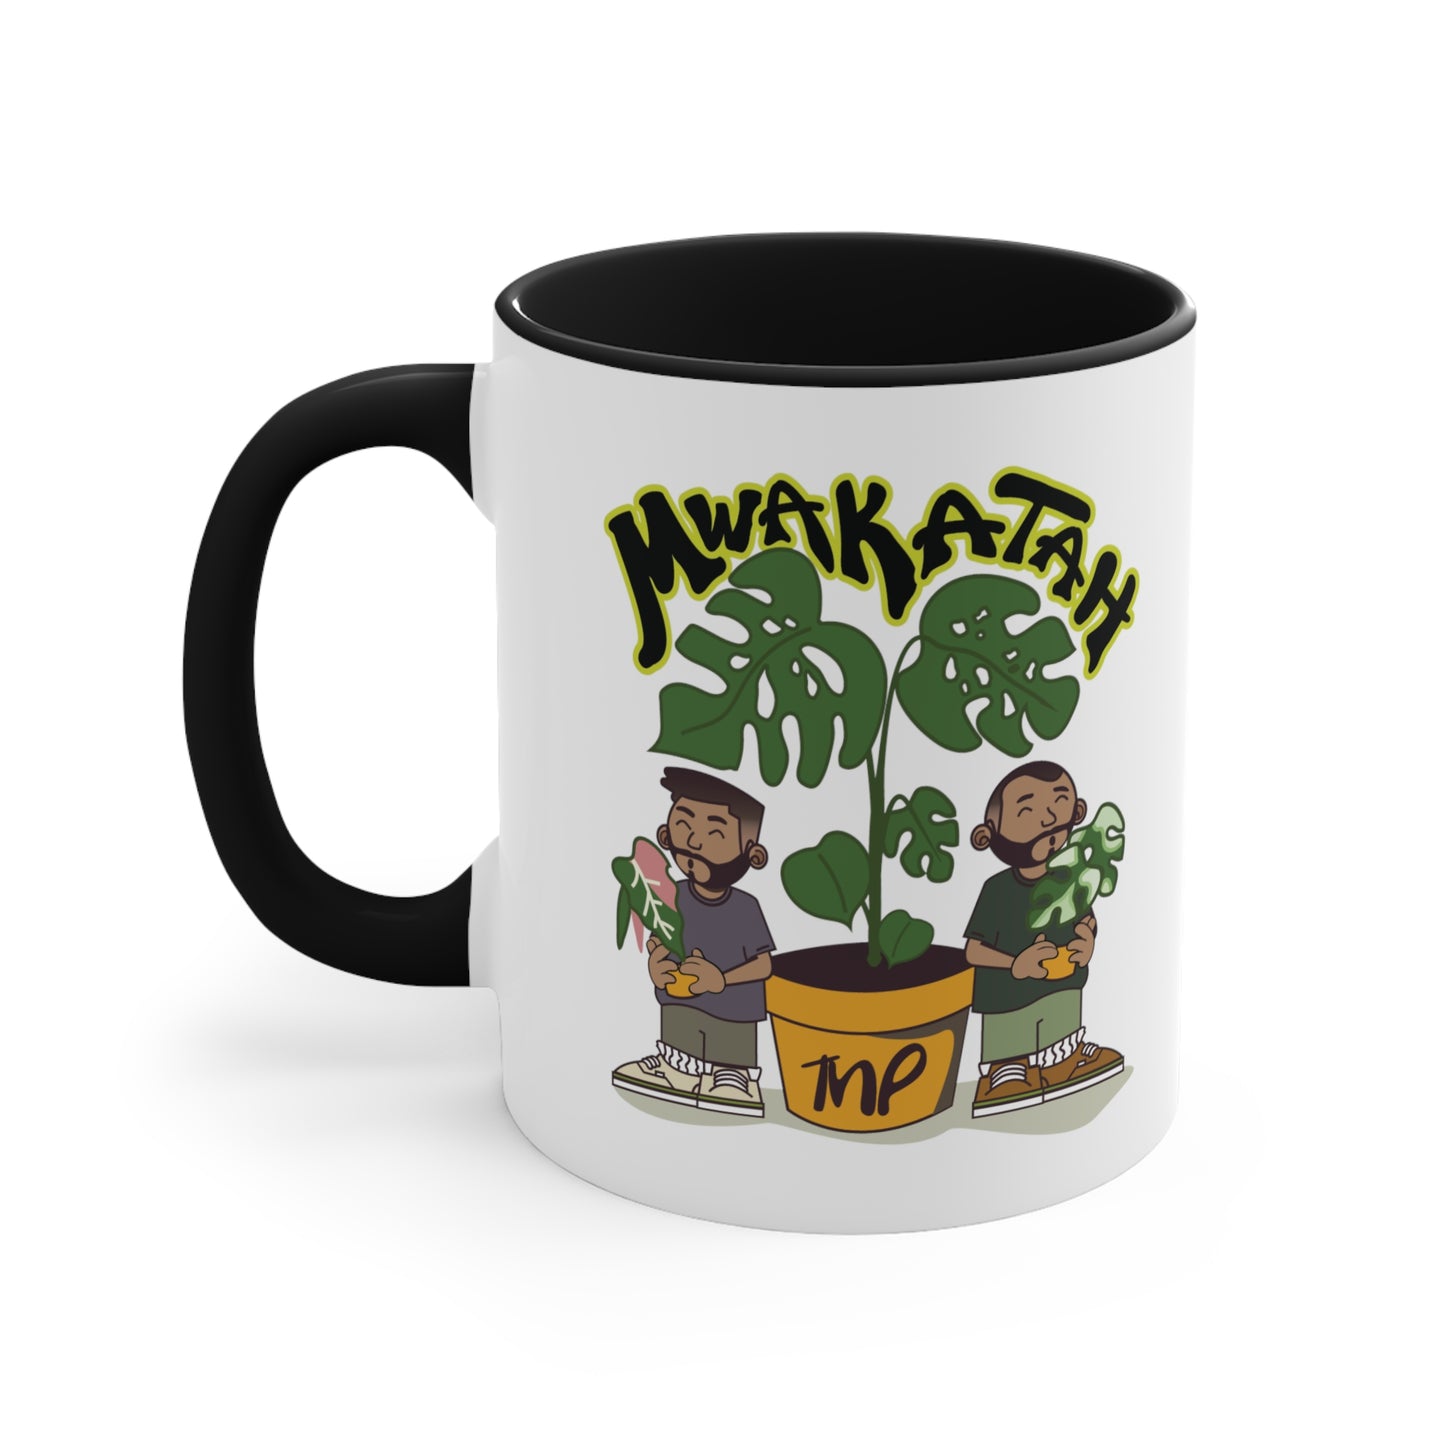 Mwakatah Coffee Mug, 11oz